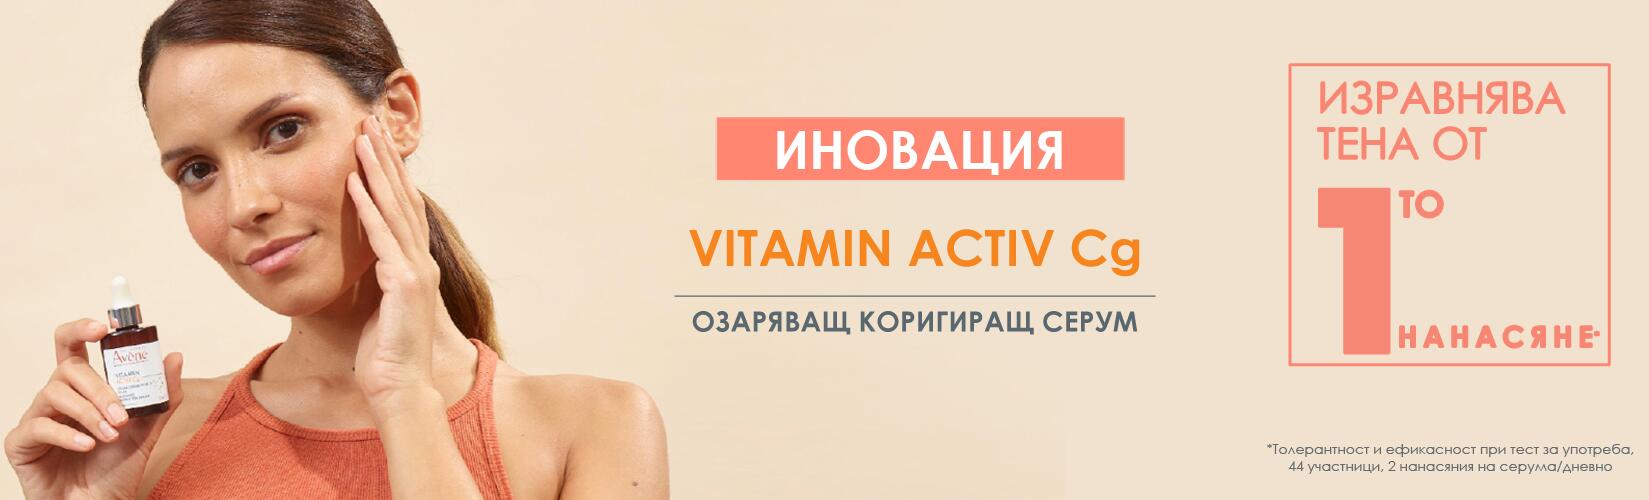 BGbaner Avene Vitamin Active Cg_1920x500px